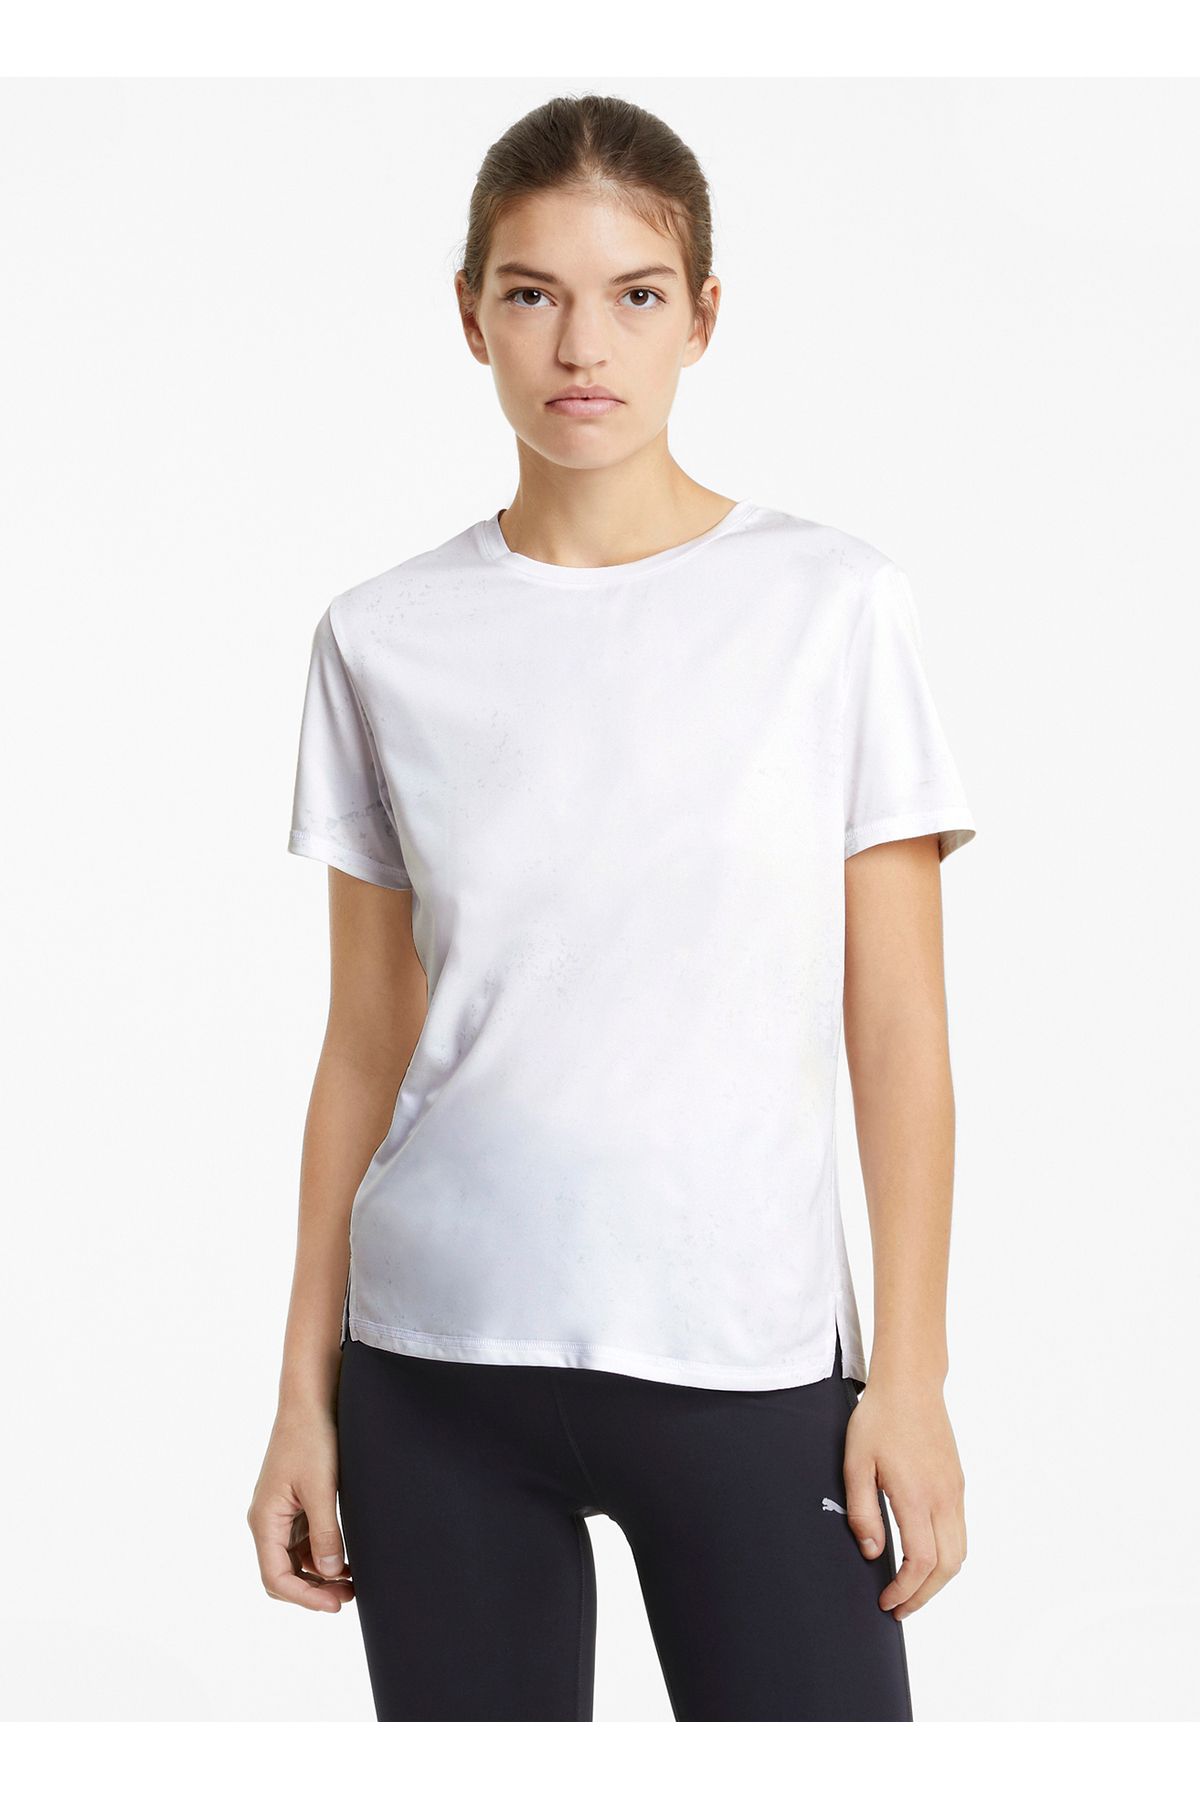 Puma O Yaka Desenli Beyaz Kadın T-shirt 52017502 Run Graphıc Ss Tee